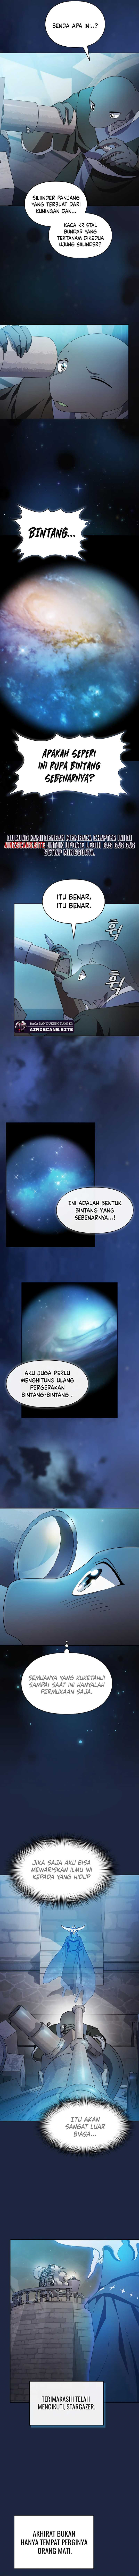 The Nebula’s Civilization Chapter 28